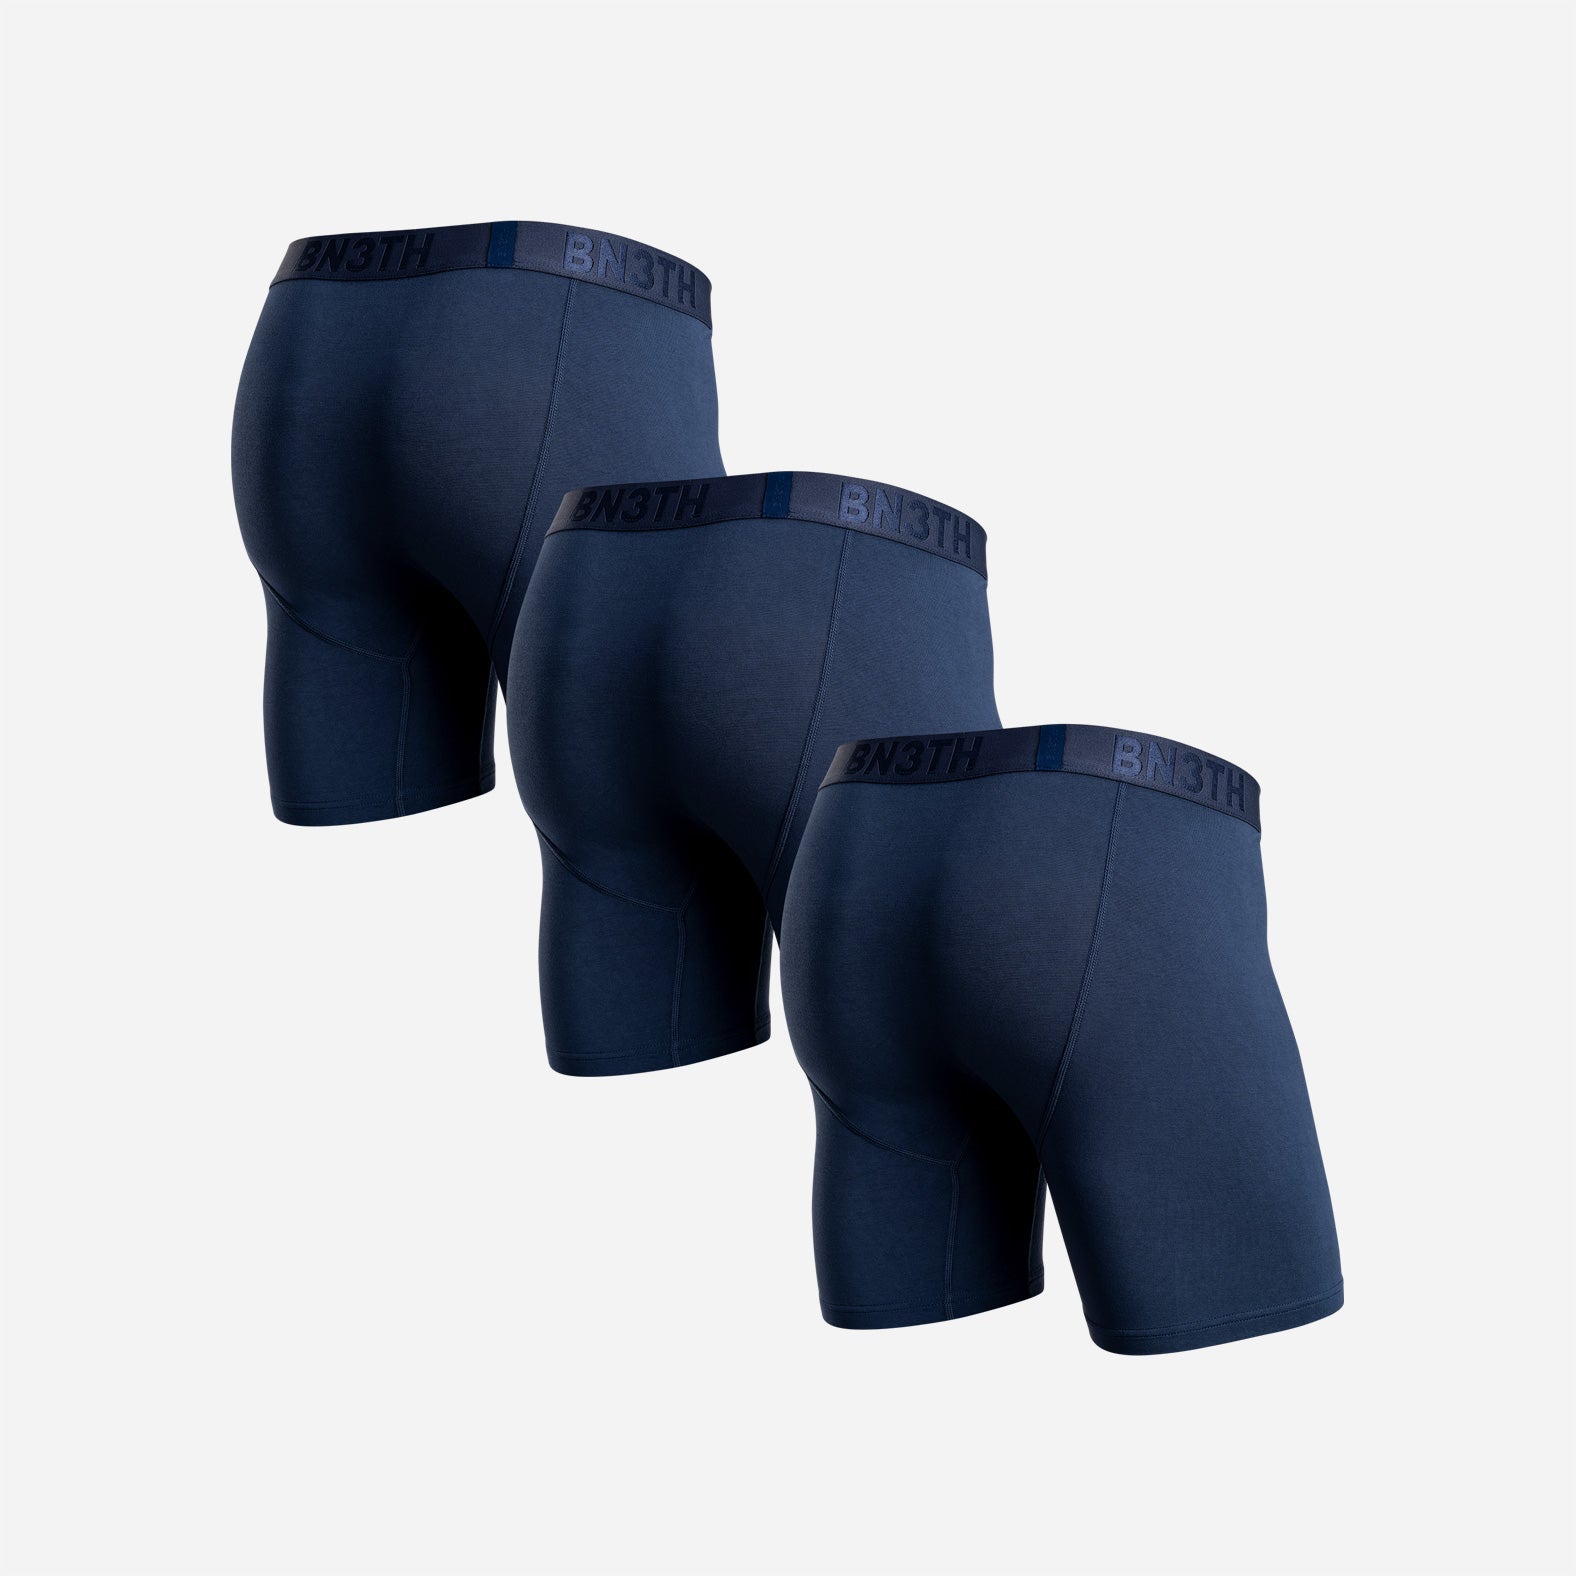 Men's Casual Signature Boxer Trunks 3-Pack - Men's Underwear